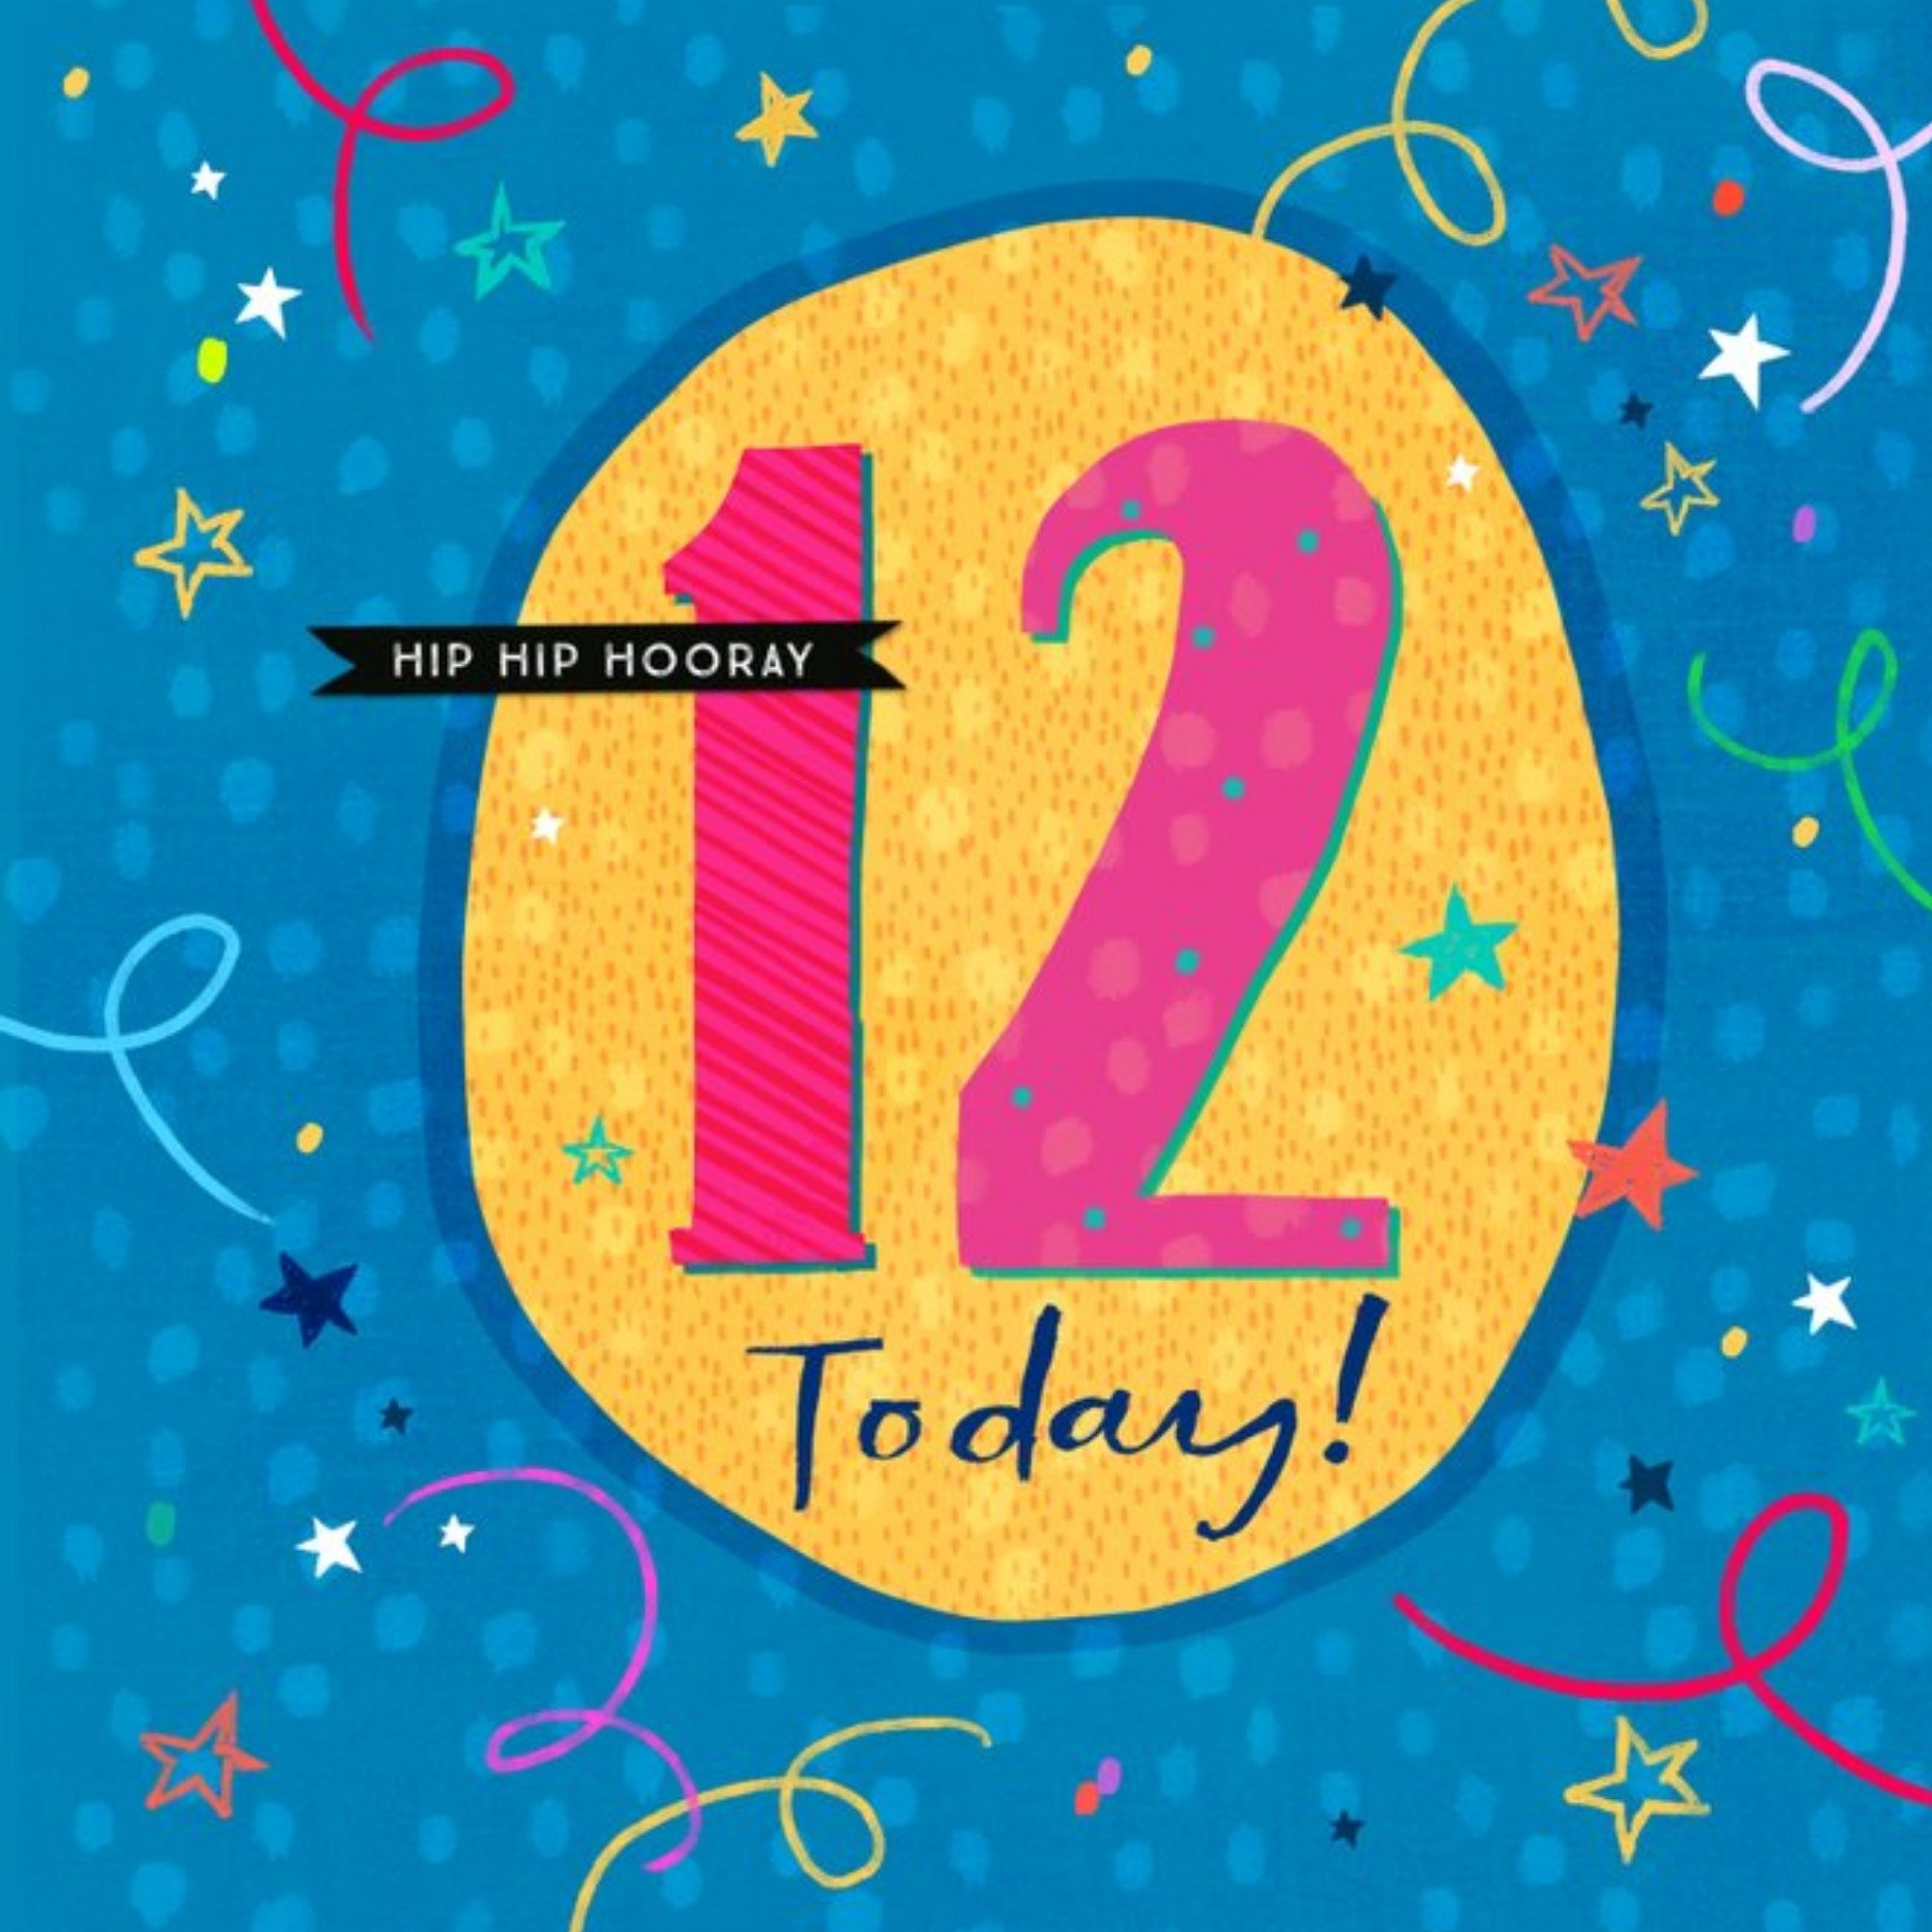 Moonpig Modern Typographic Design Hip Hip Hooray 12 Today Birthday Card, Square